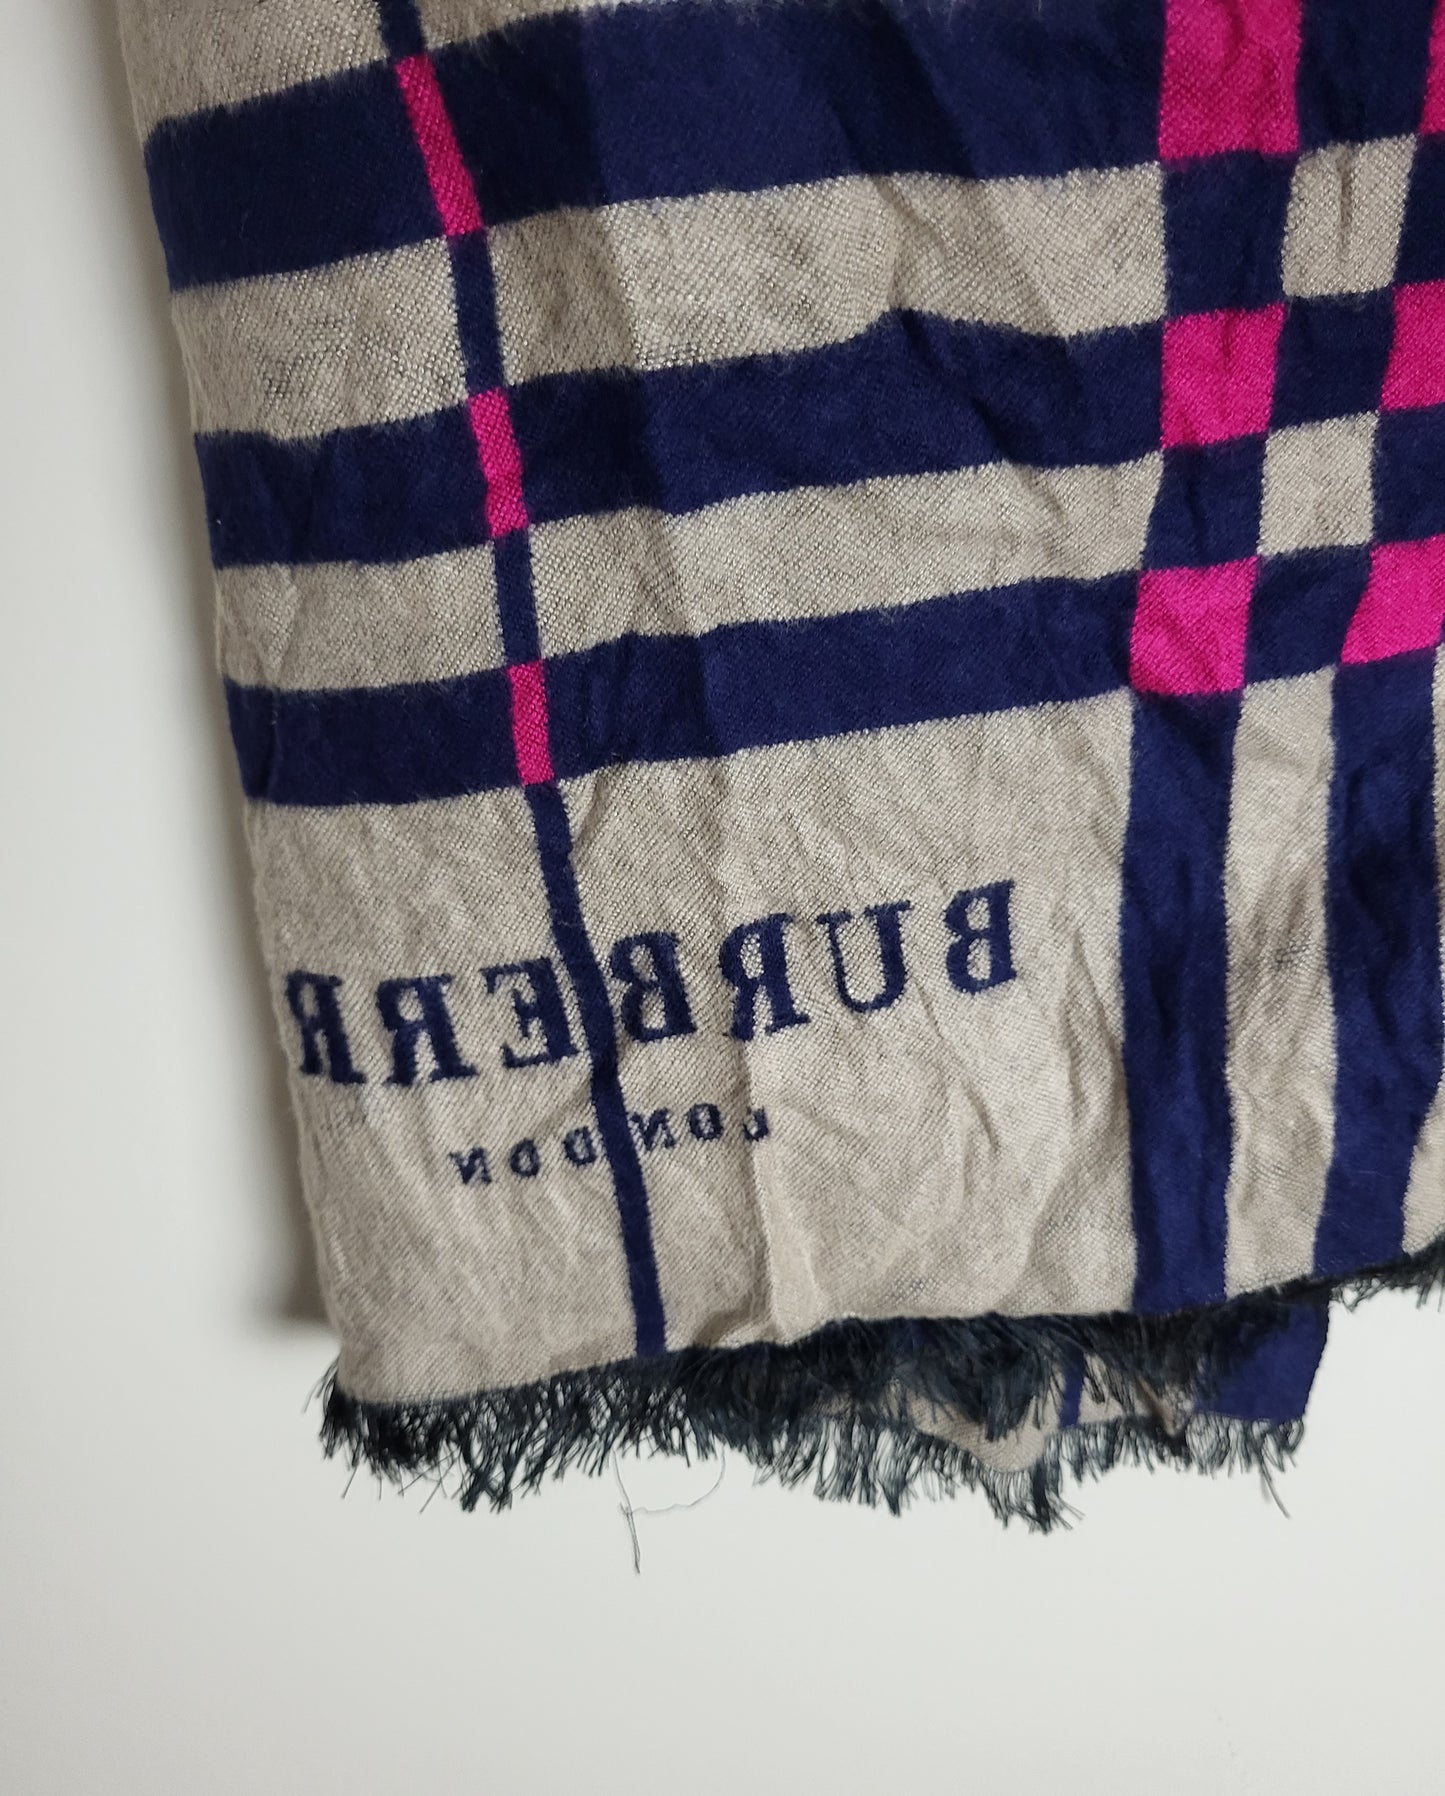 Burberry London - Vintage Schal / Tuch - Dunkelblau Logo - Kaschmir - 190 x 60